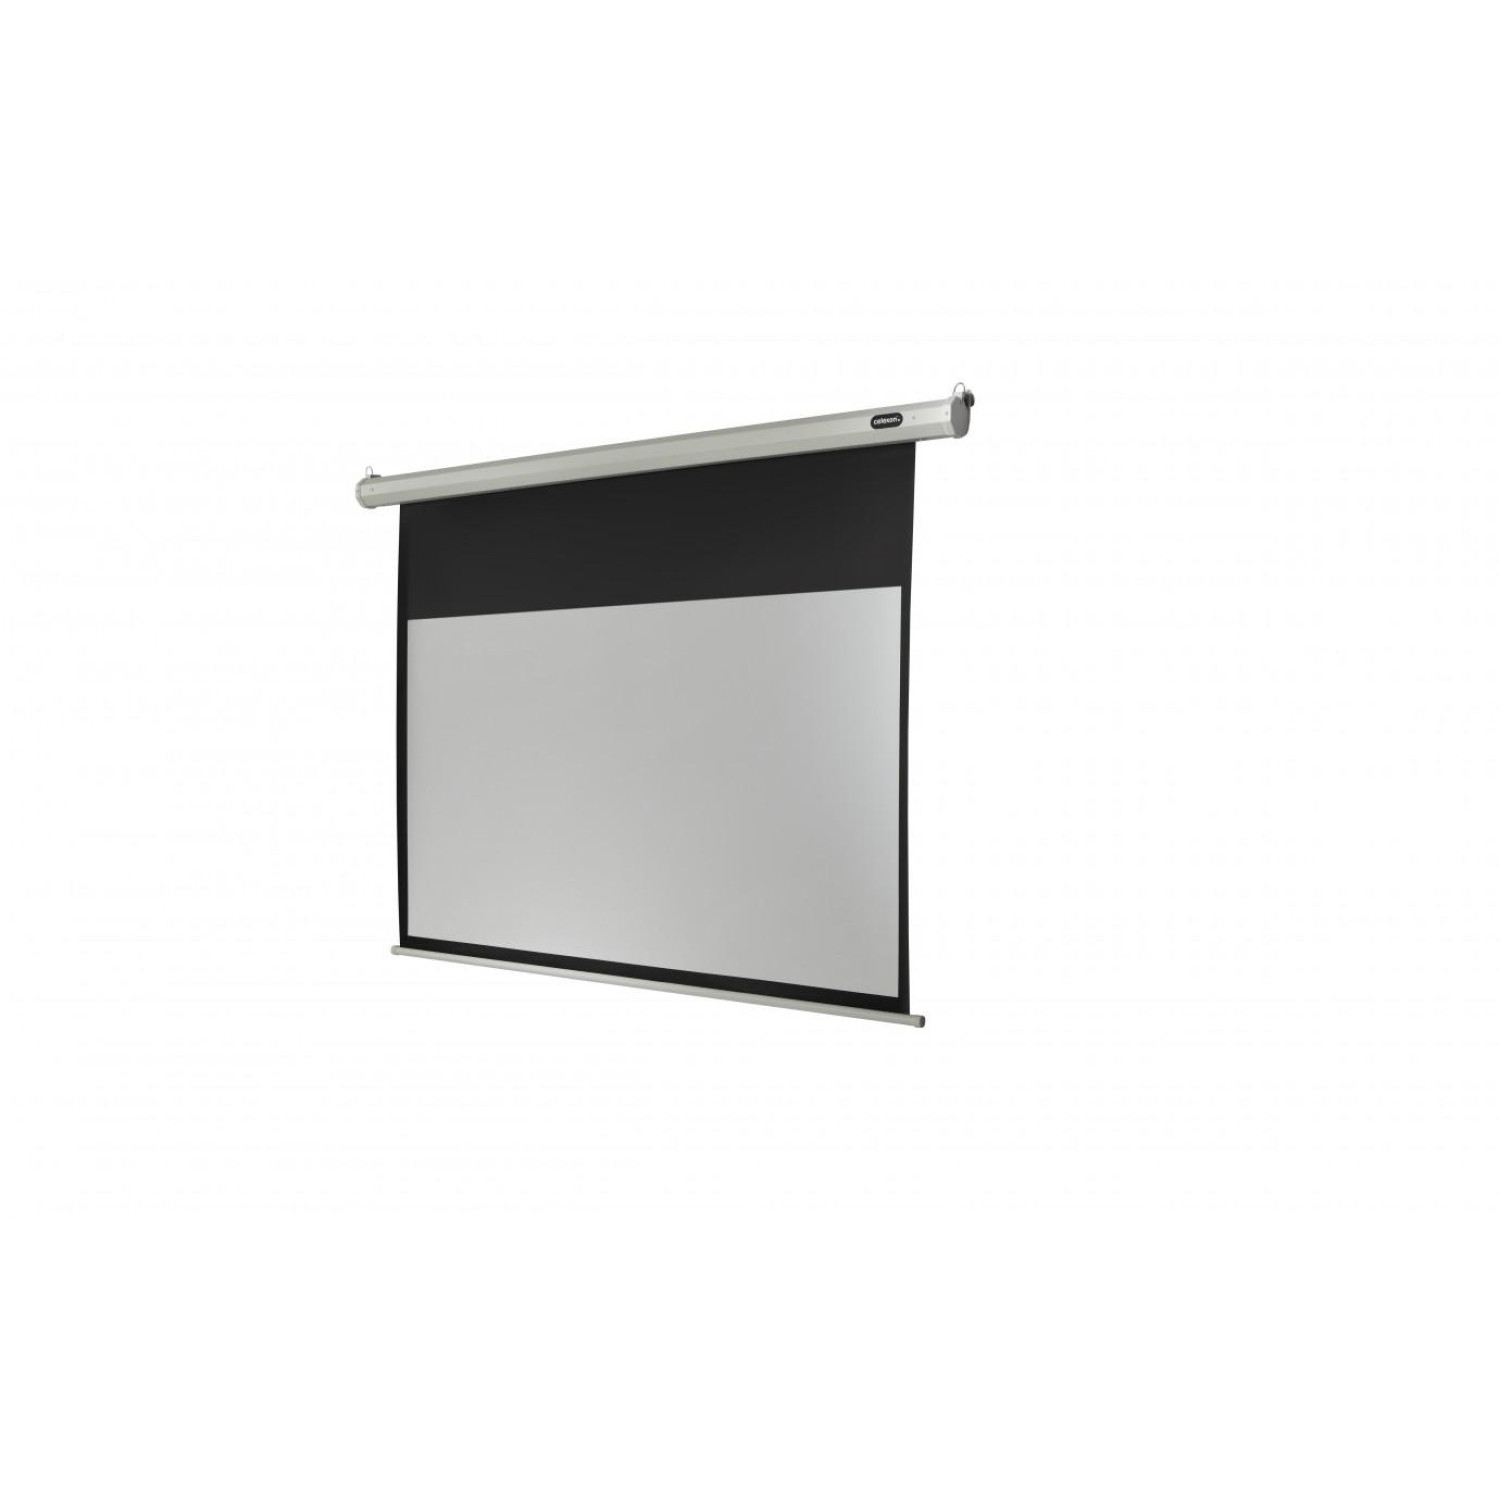 Електрически екран за стена CELEXON  Electric Economy, с дист. управление, 200 x 113 cm, 16:9, Matte white